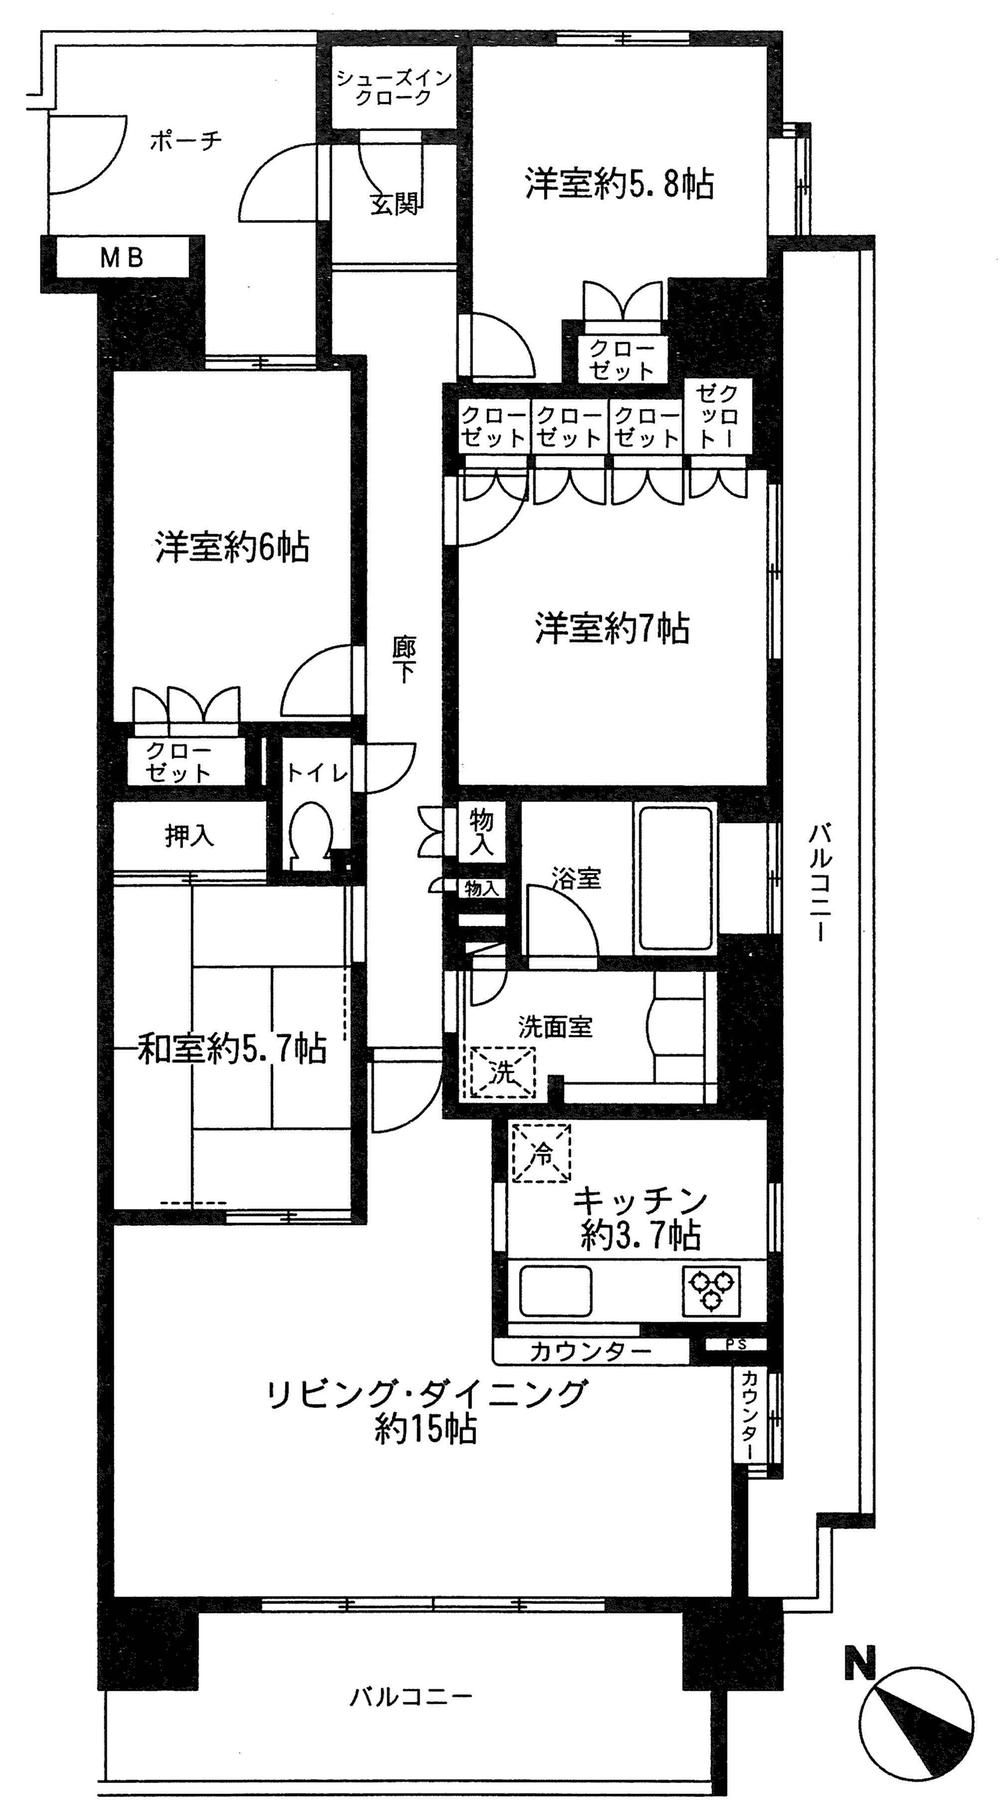 Floor plan. 4LDK, Price 29,800,000 yen, Footprint 100.28 sq m , Balcony area 26.4 sq m